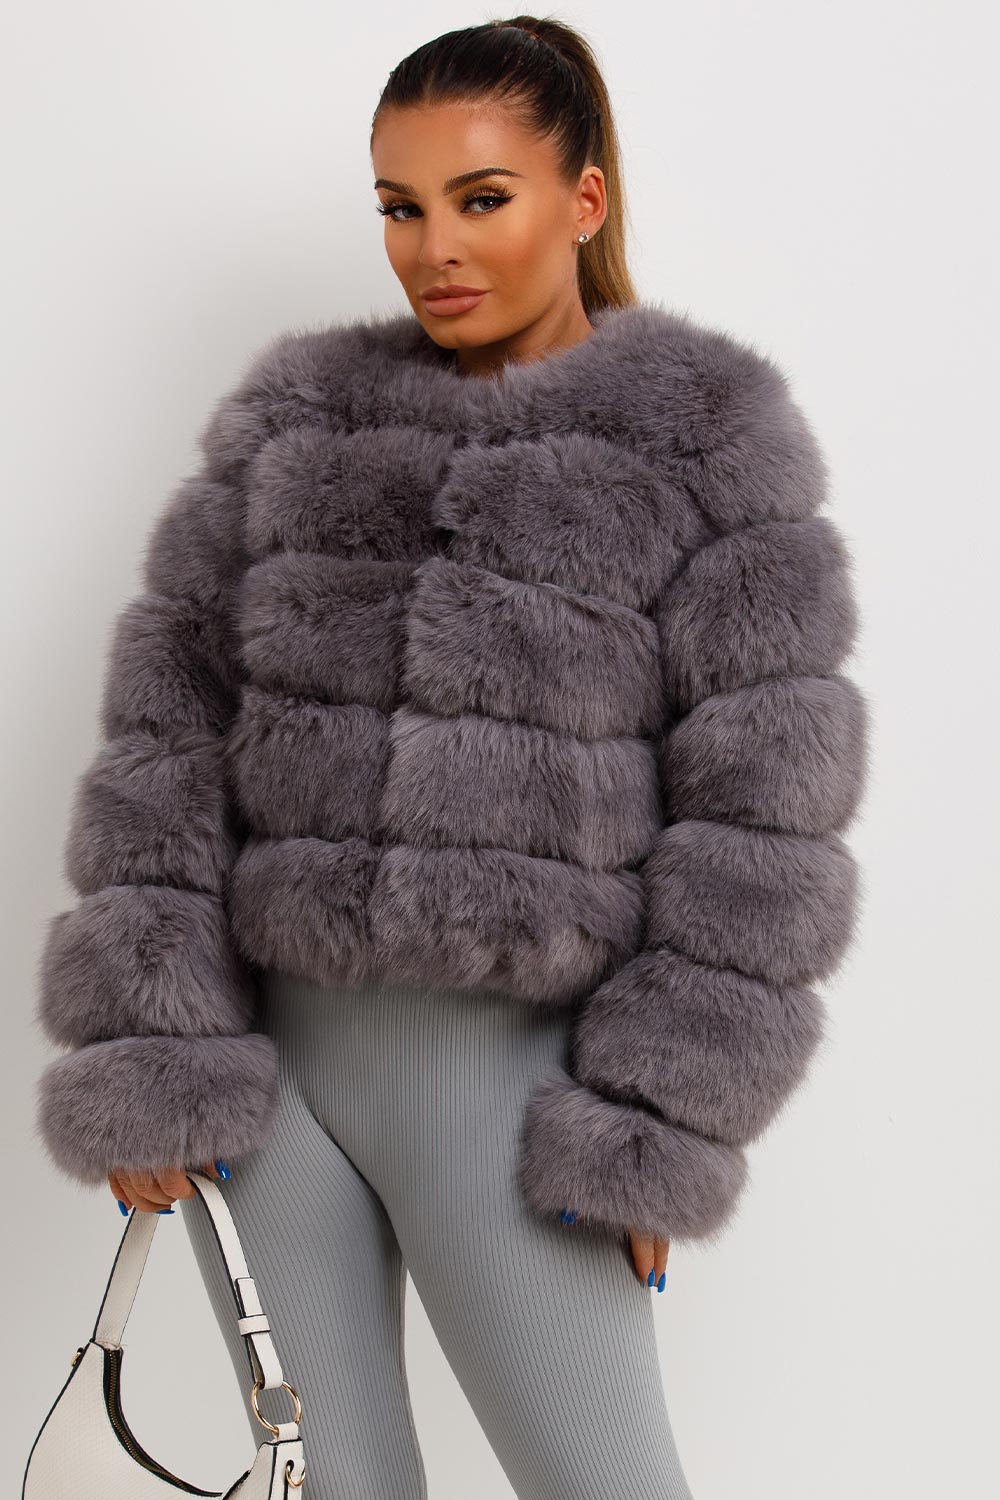 faux fur coat womens uk 